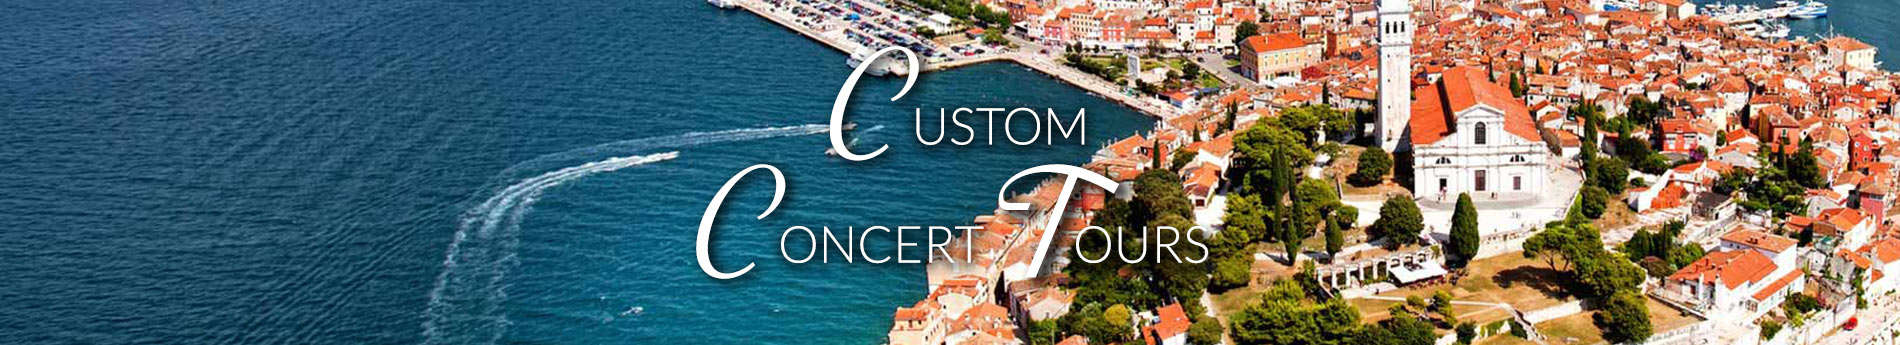 music contact international Customized Concert Tours